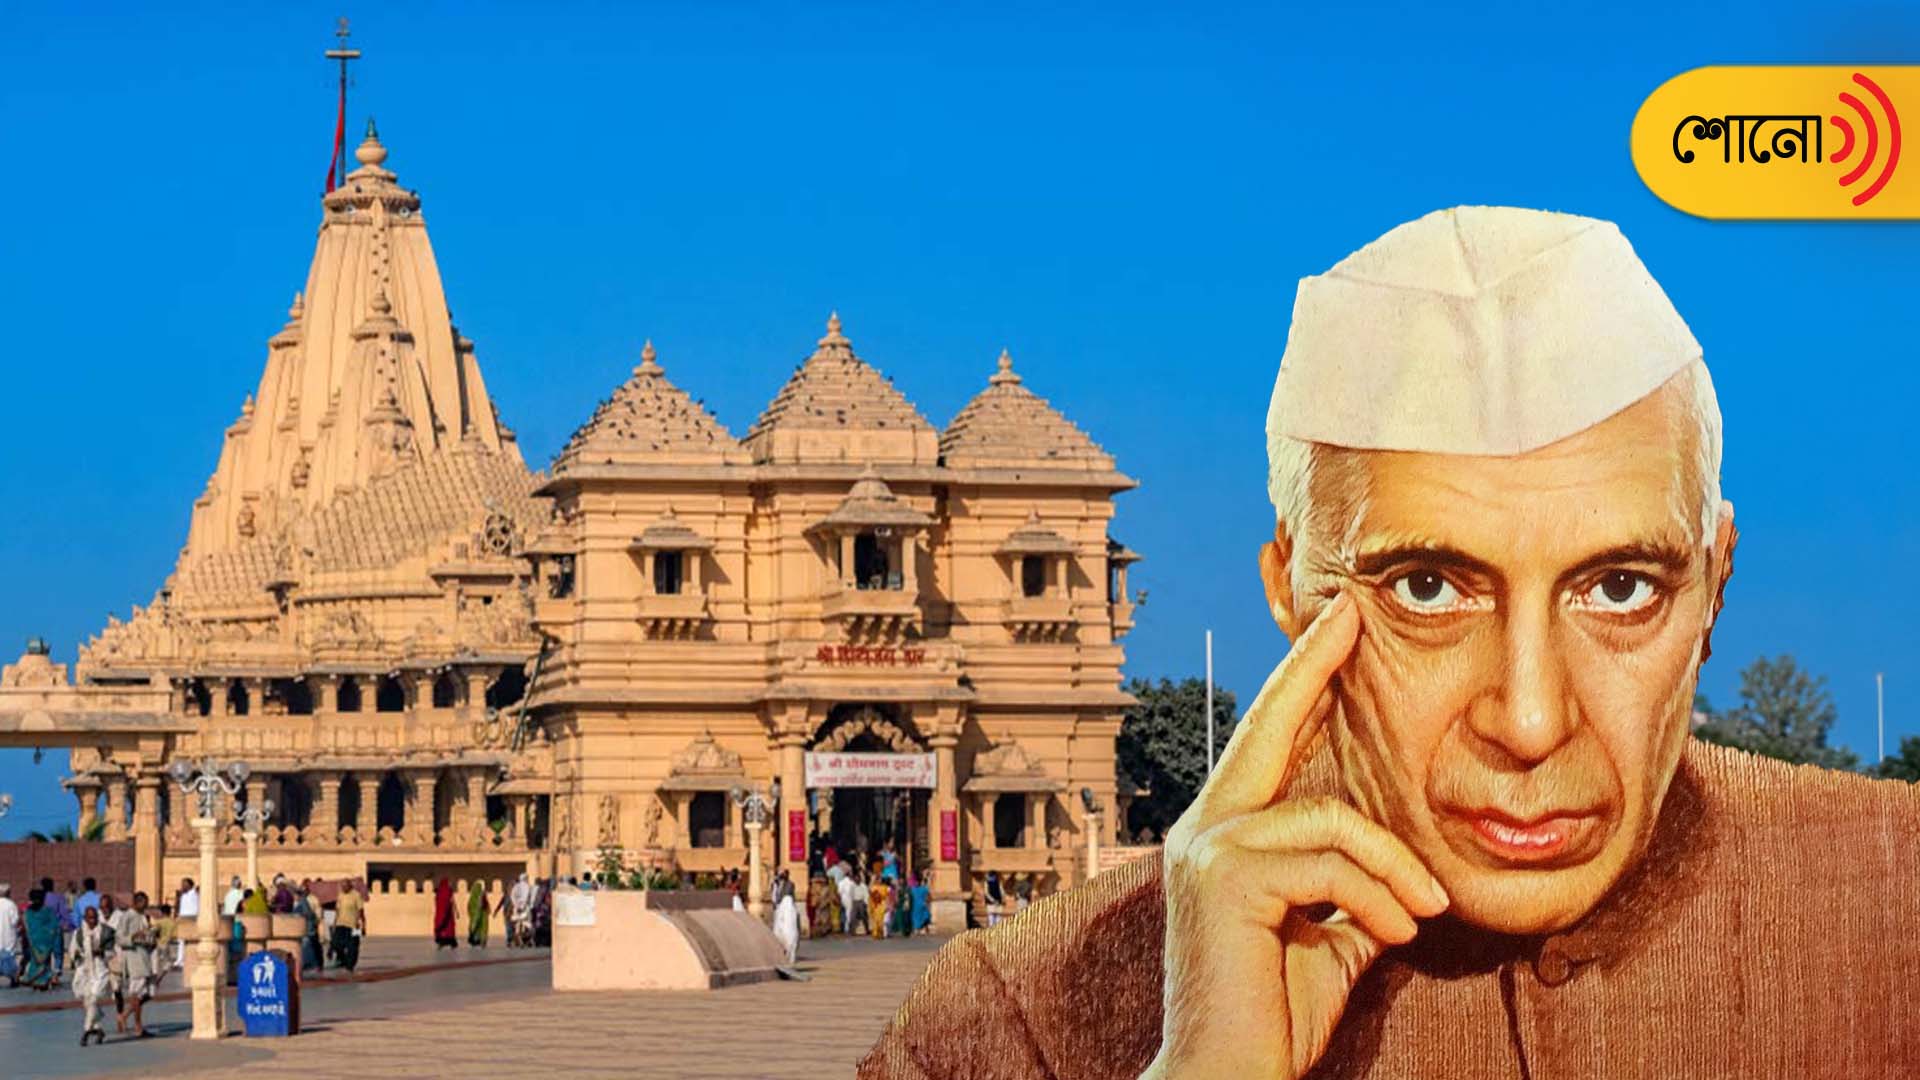 Jawaharlal Nehru opposes the rebuilt process of Somnath temple